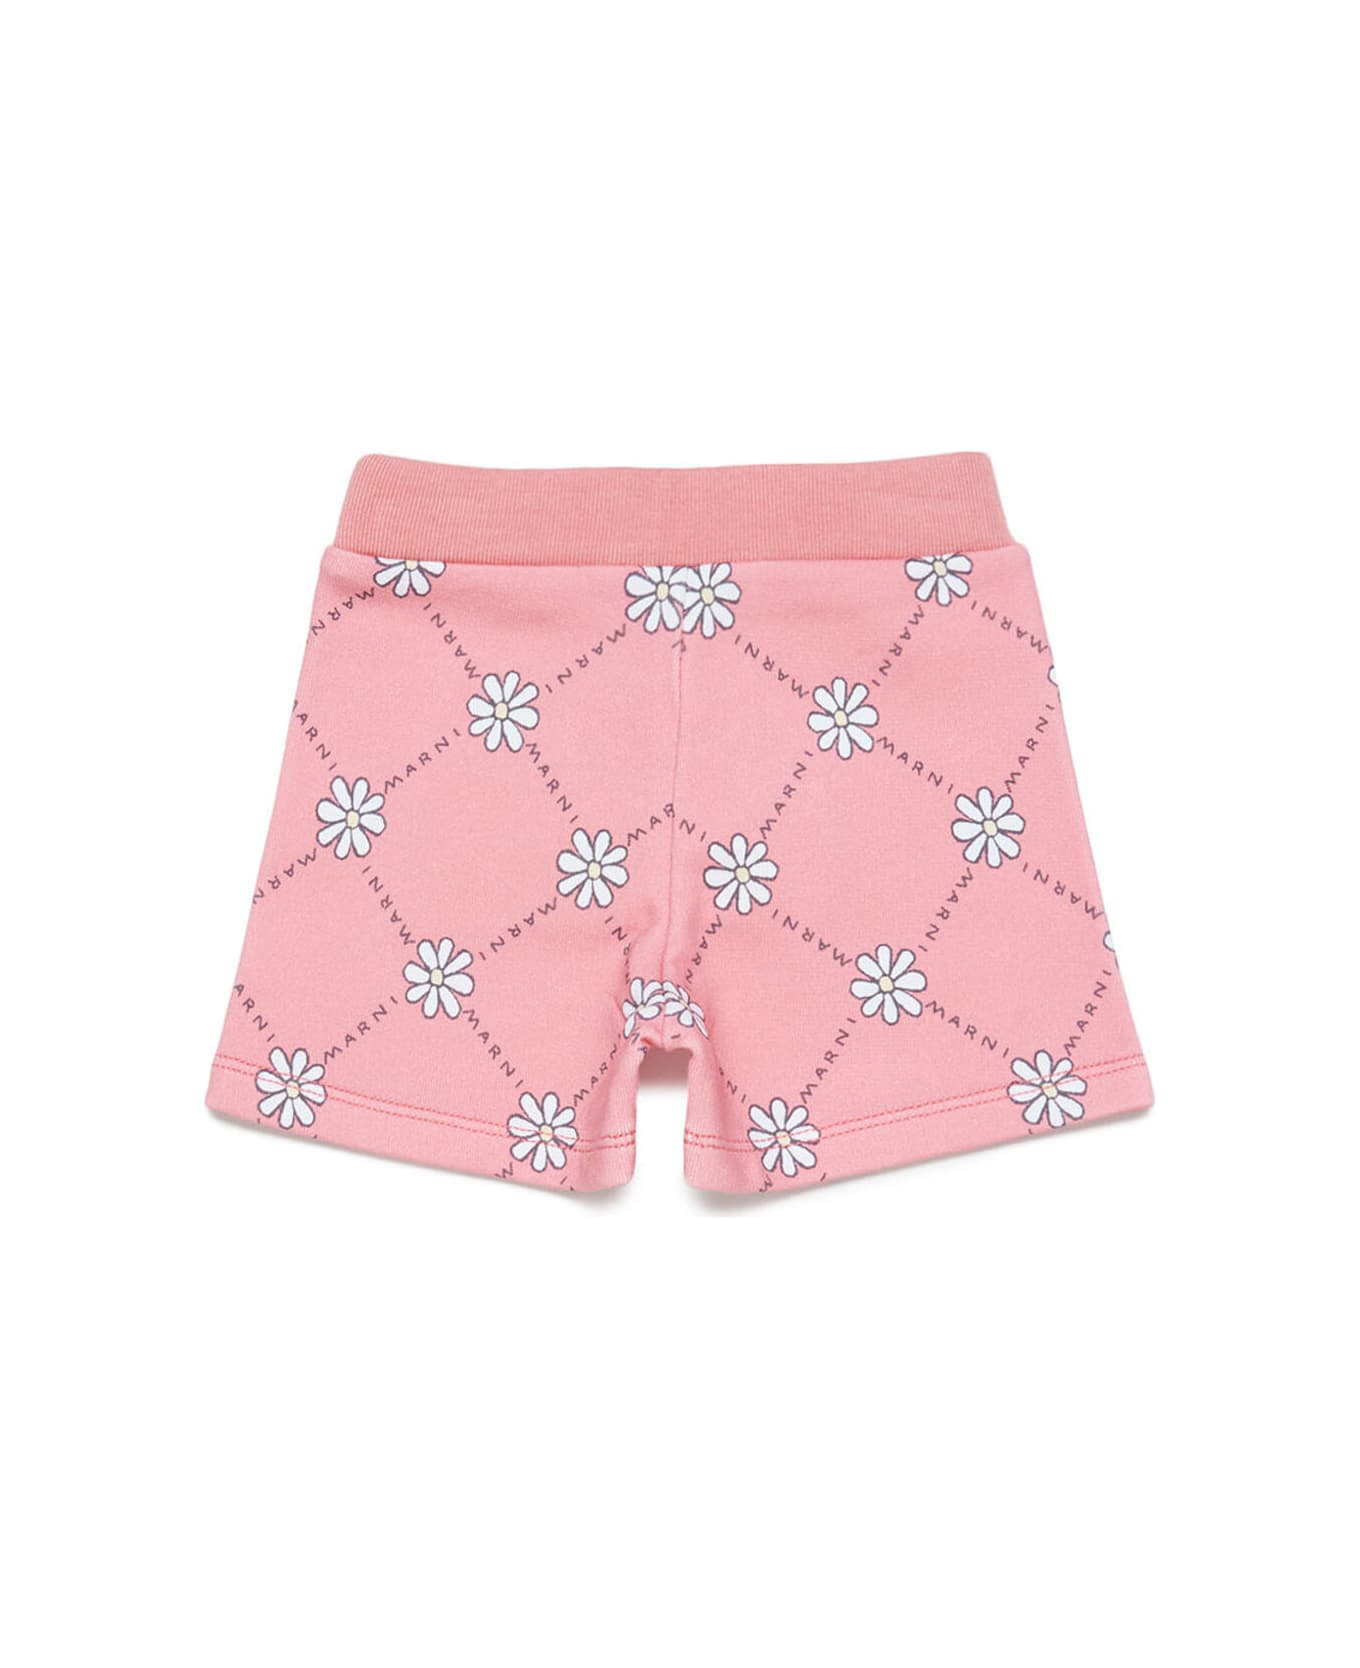 Marni Mp34b Shorts buckle Marni Peach Pink Cotton Shorts With Daisy Pattern - Peach blossom